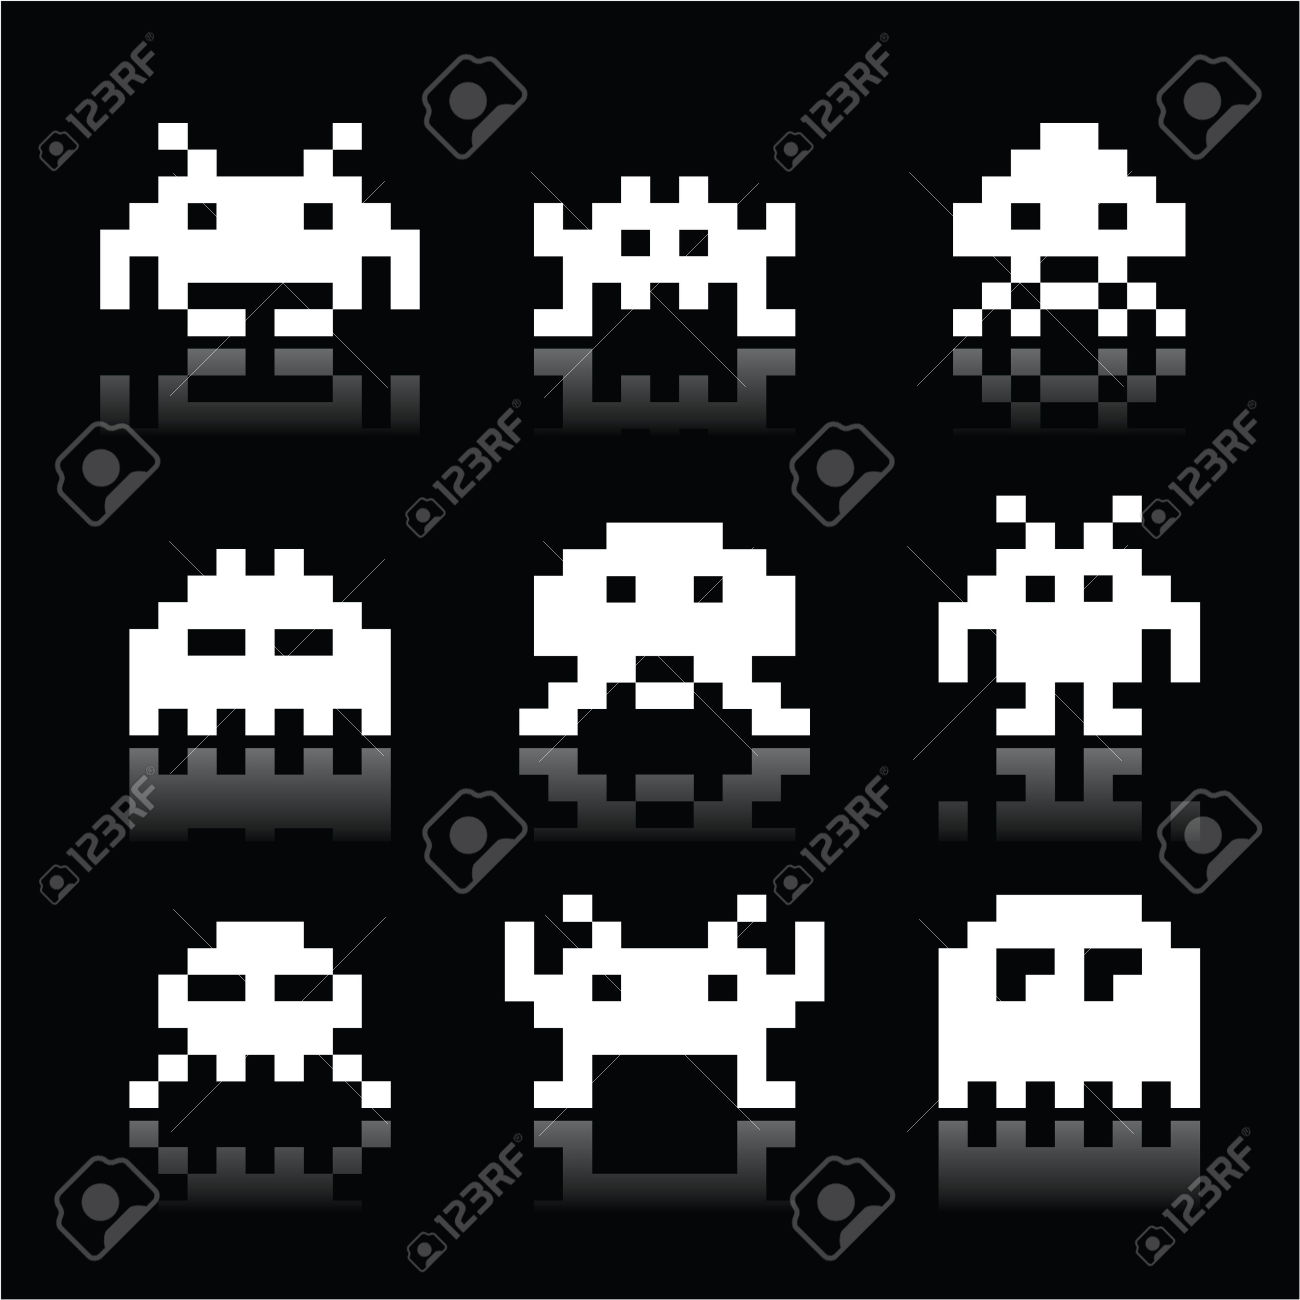 8-Bit Invaders! HD wallpapers, Desktop wallpaper - most viewed